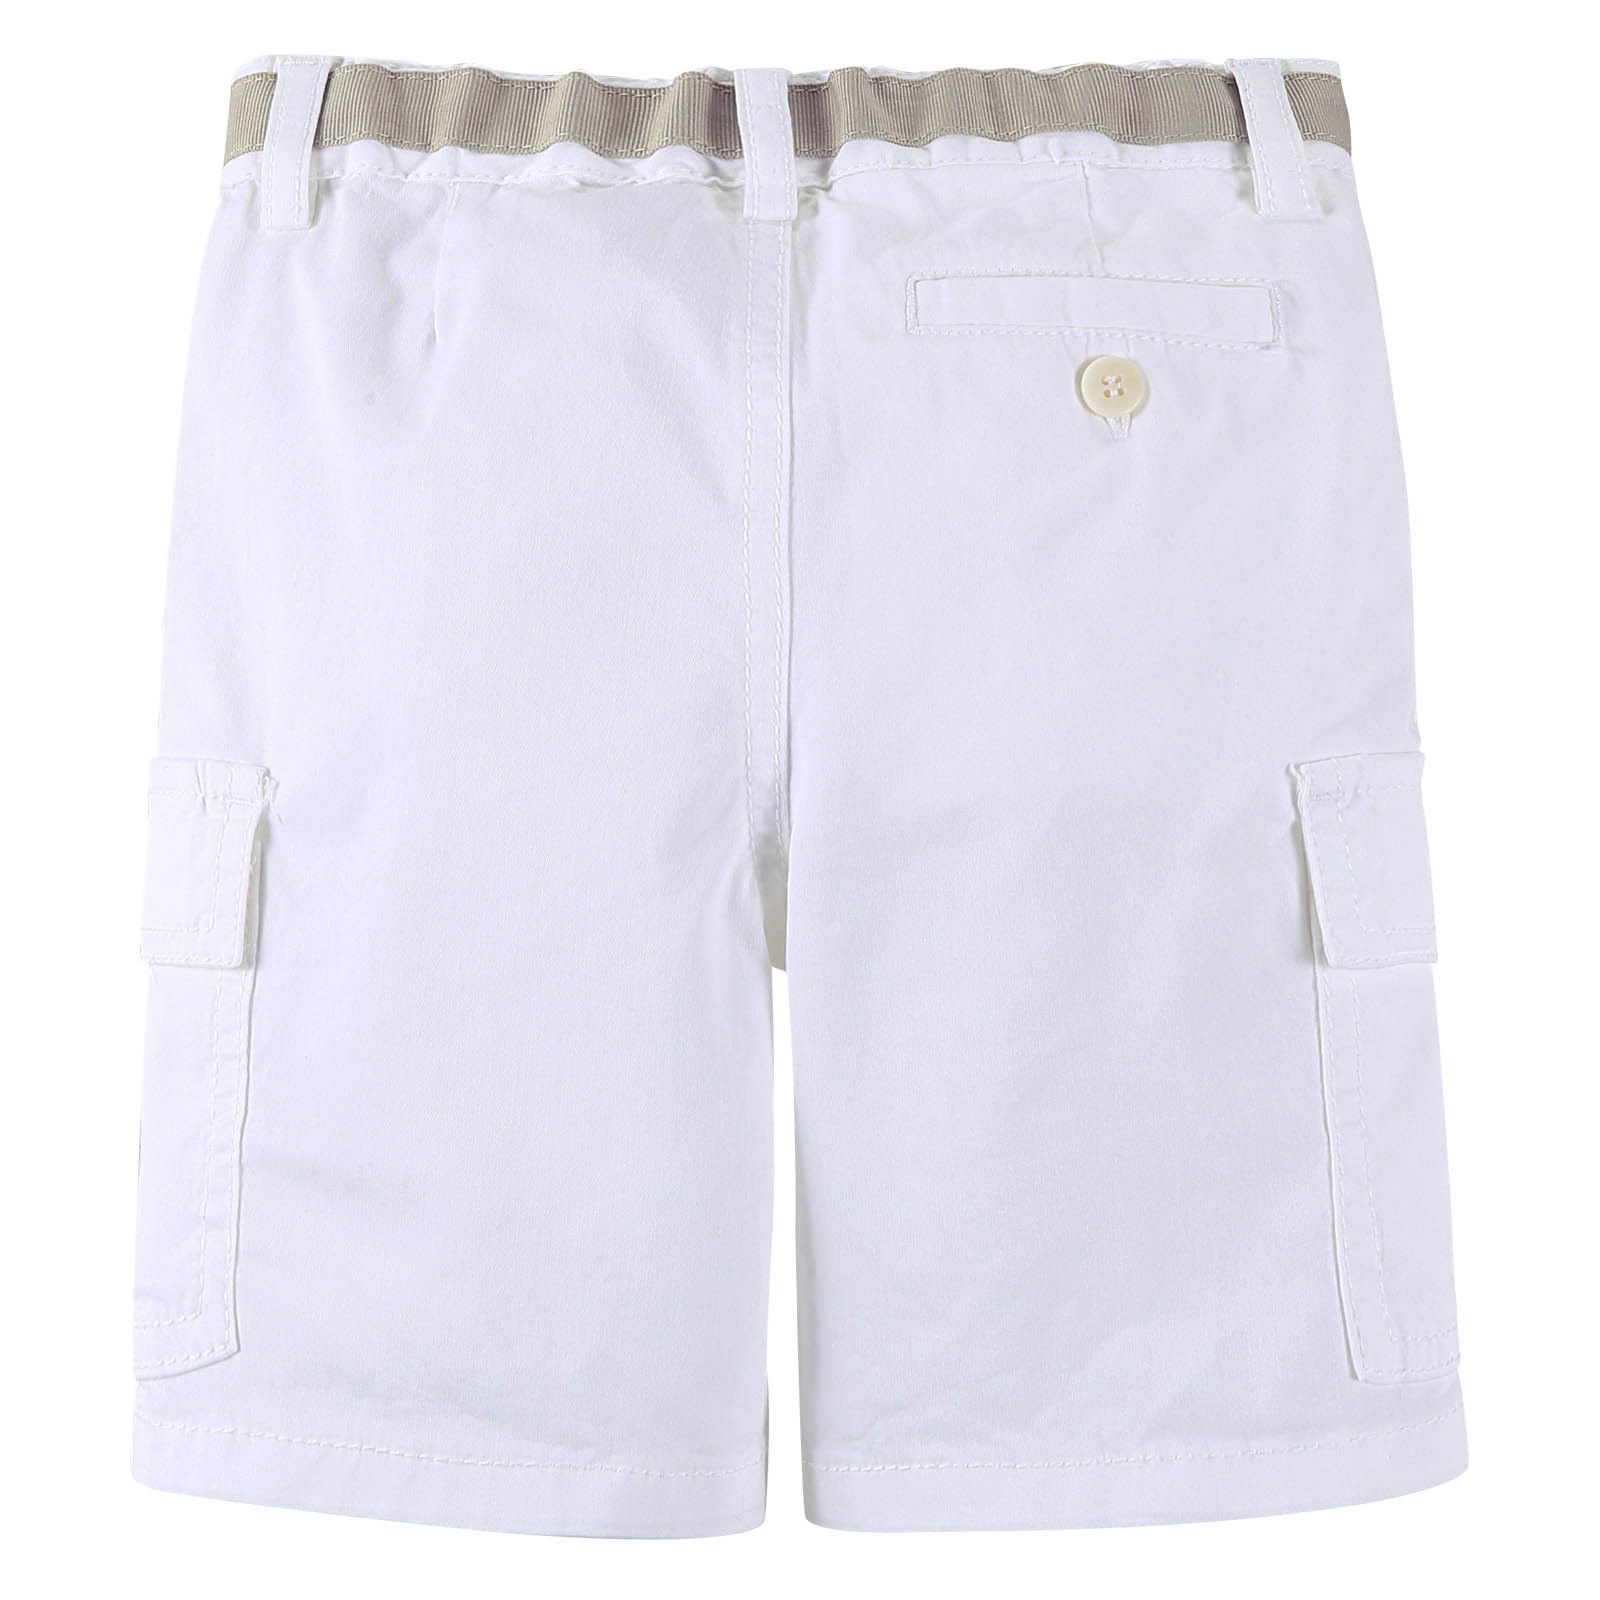 Boys White Cotton Bermuda Shorts With Patch Pockets - CÉMAROSE | Children's Fashion Store - 2